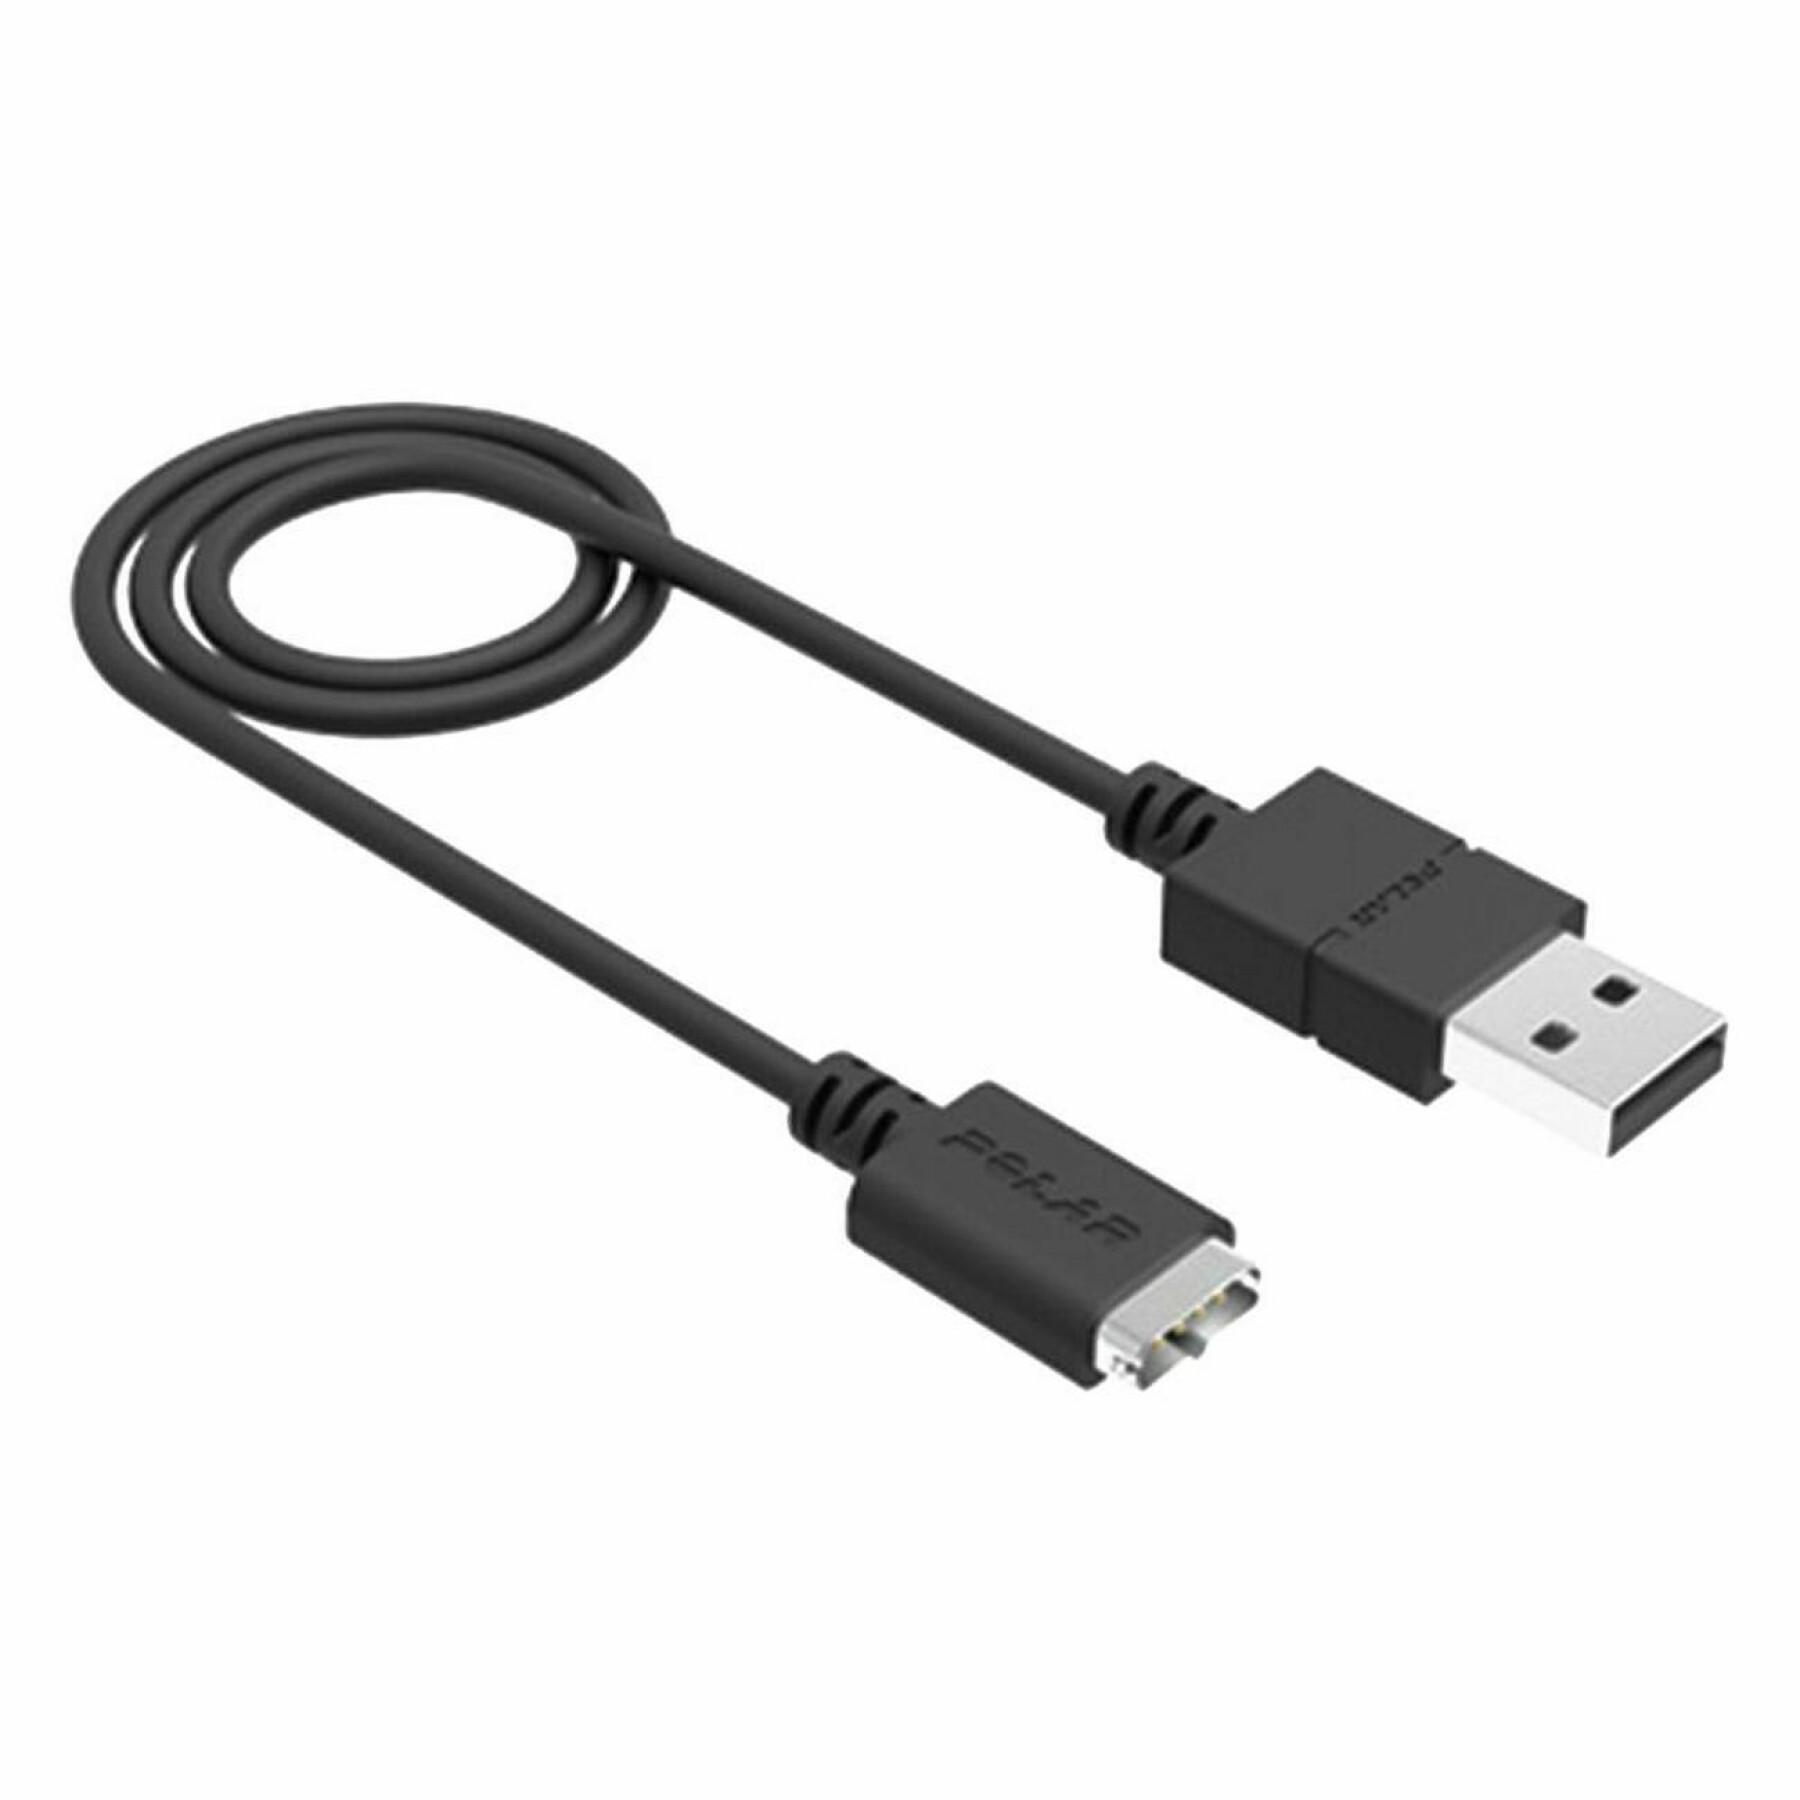 USB-kabel Polar M430